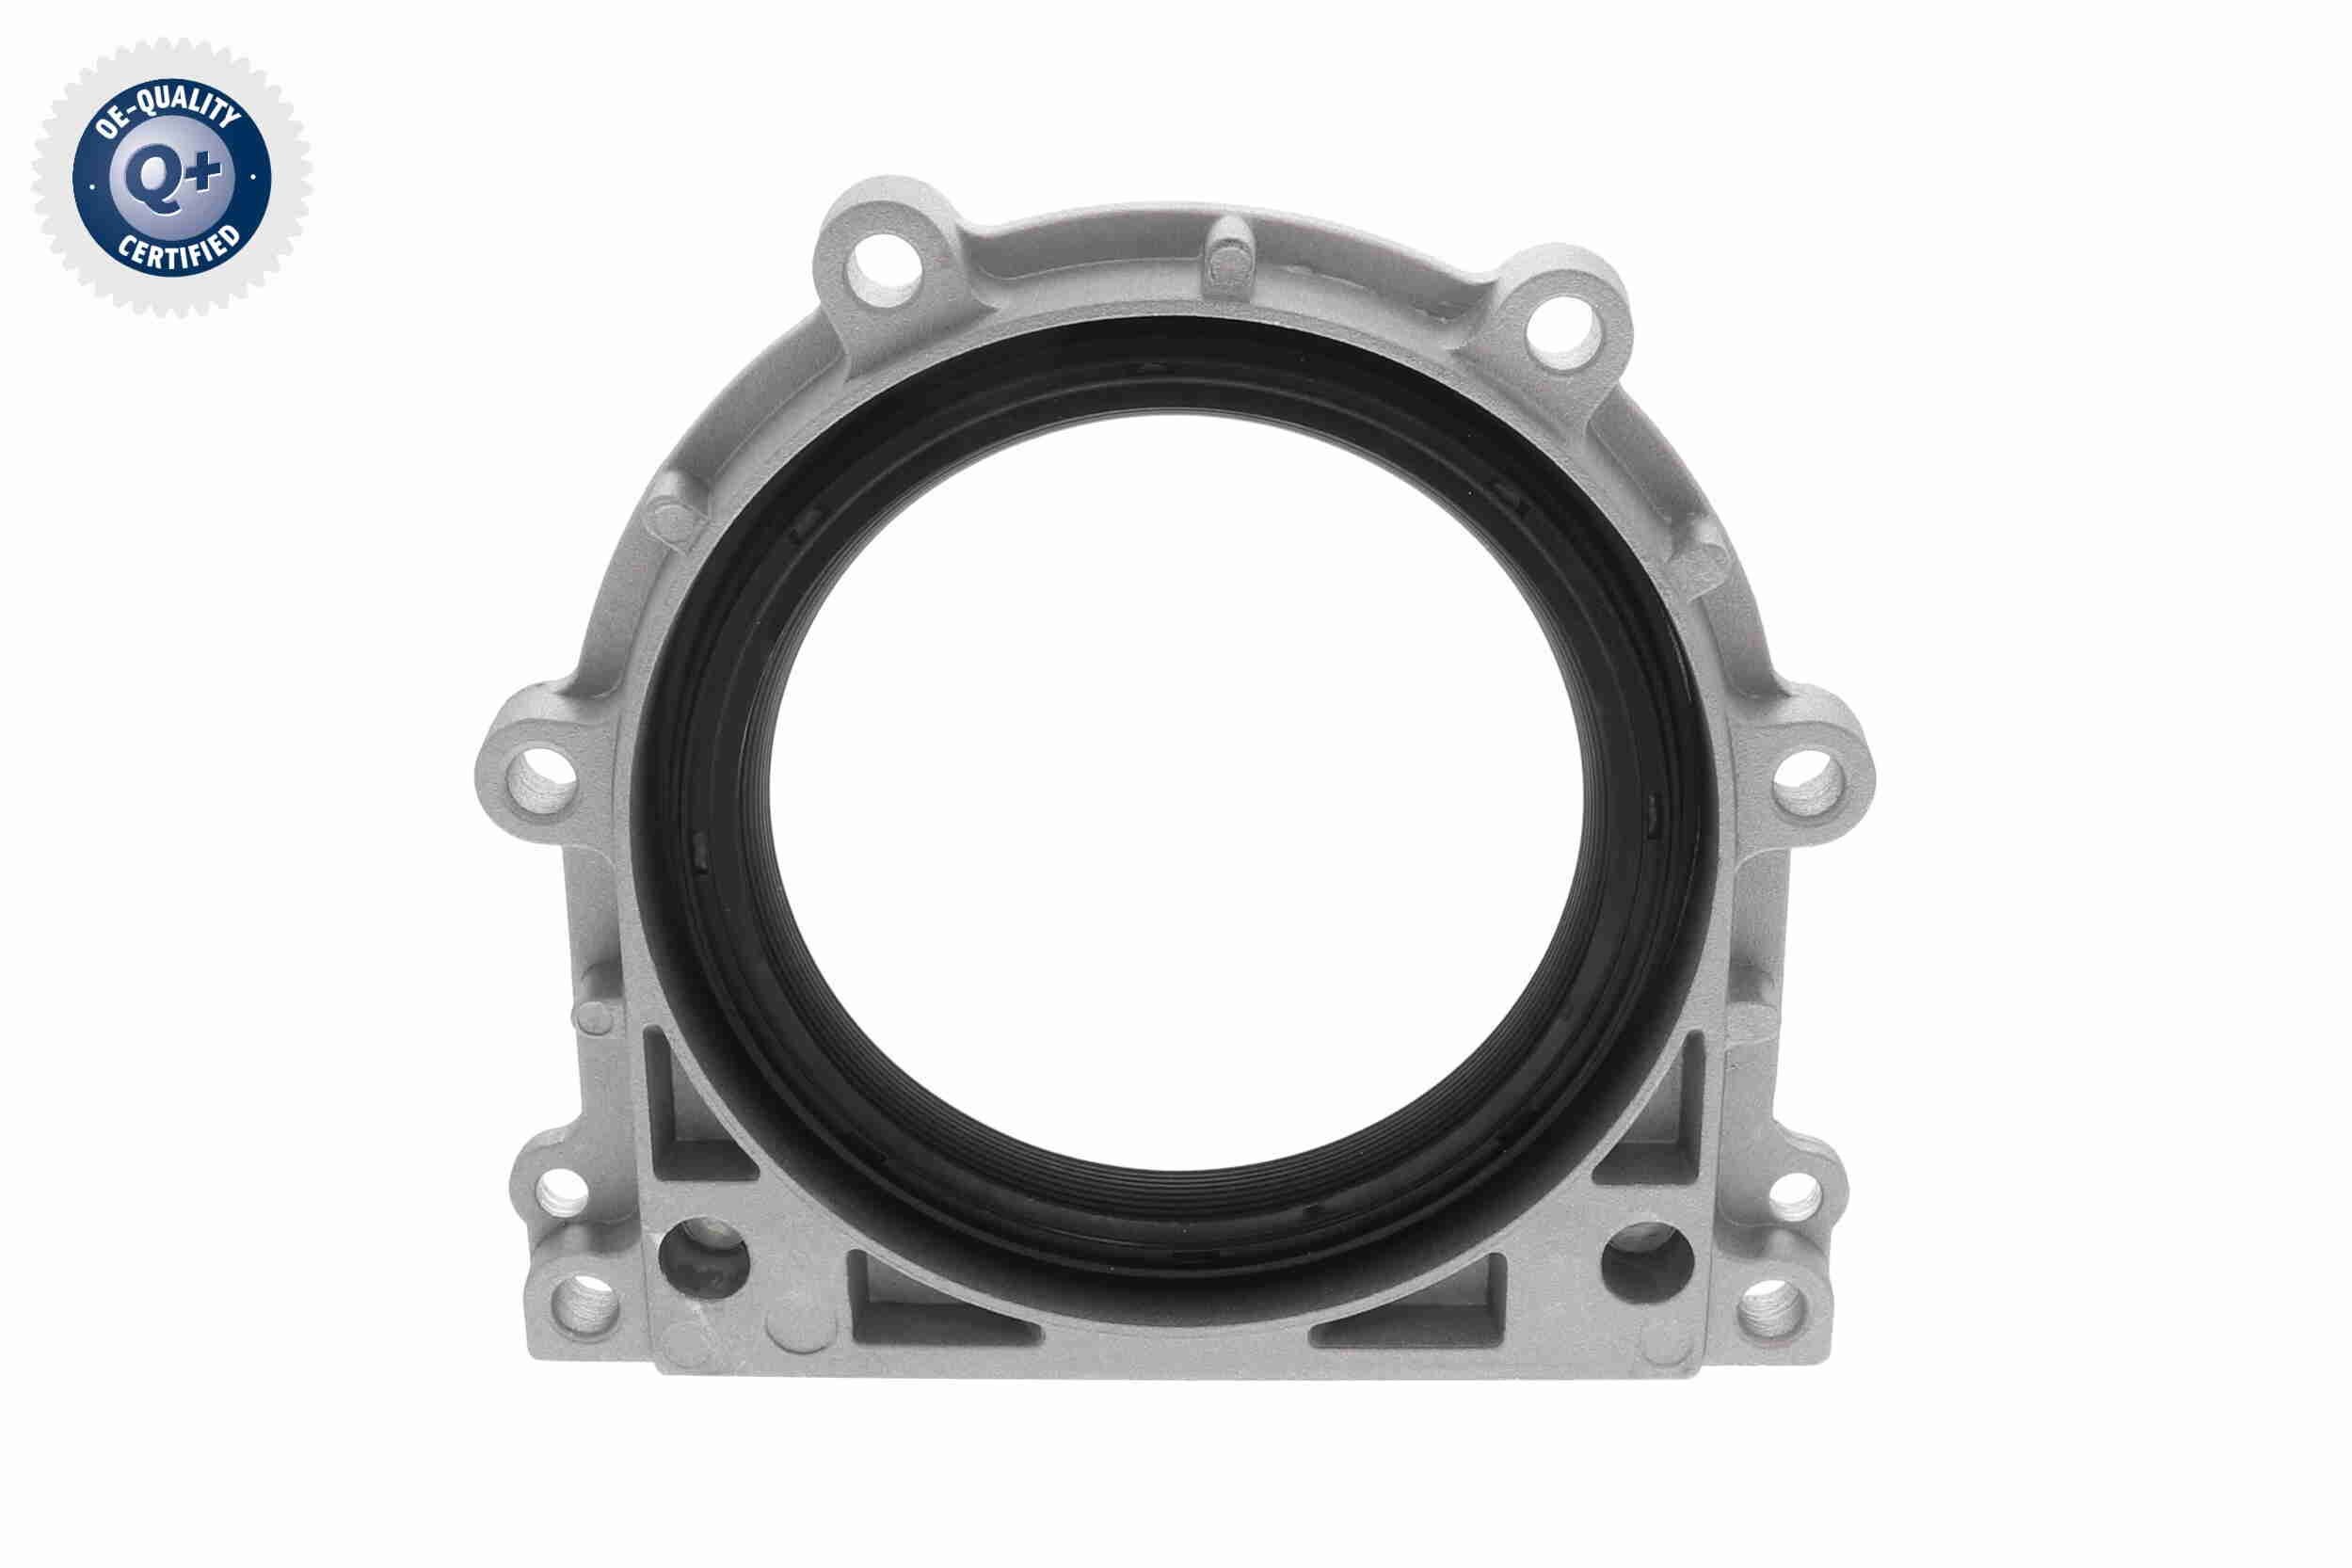 VAICO V30-6142 Crankshaft seal Q+, original equipment manufacturer quality, transmission sided